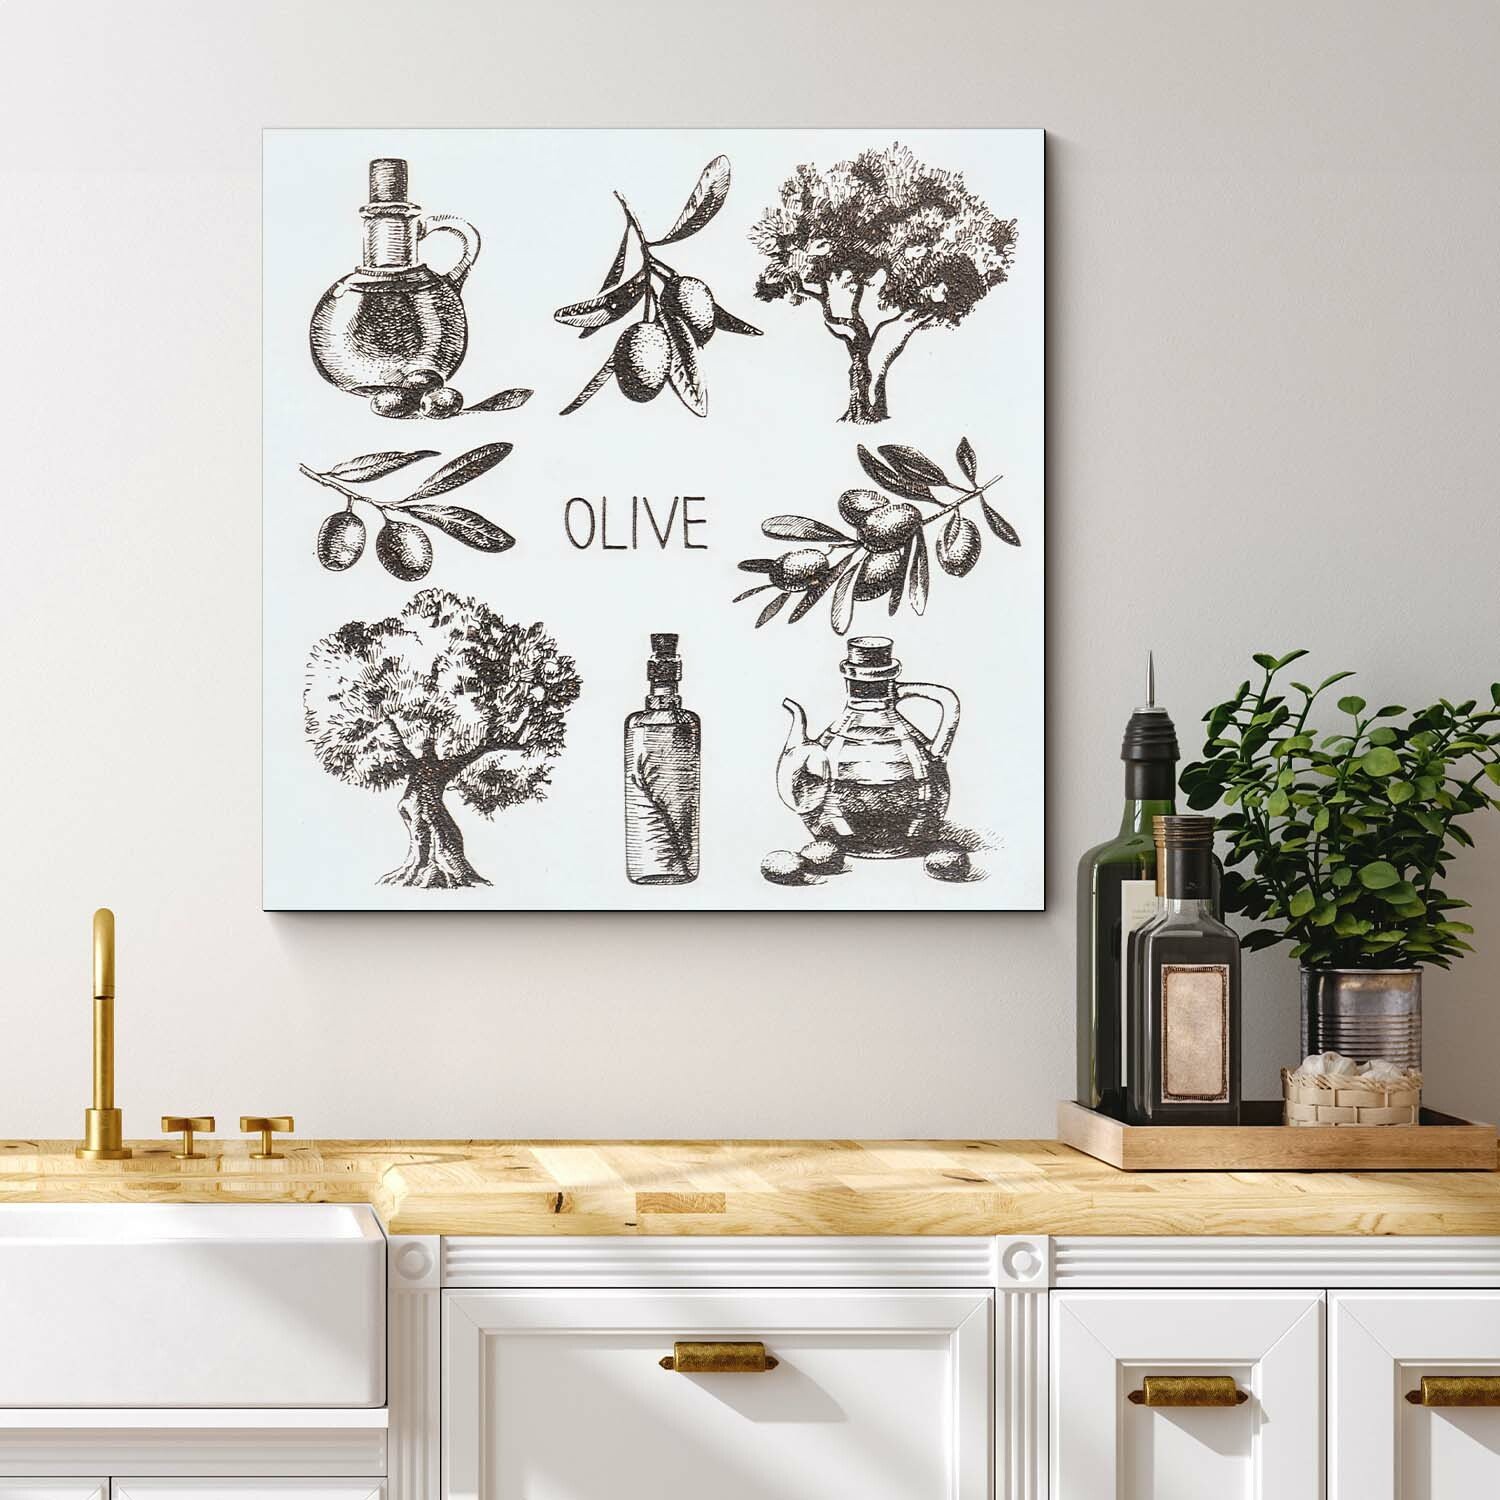 Drevený kuchynský obraz - Olivy